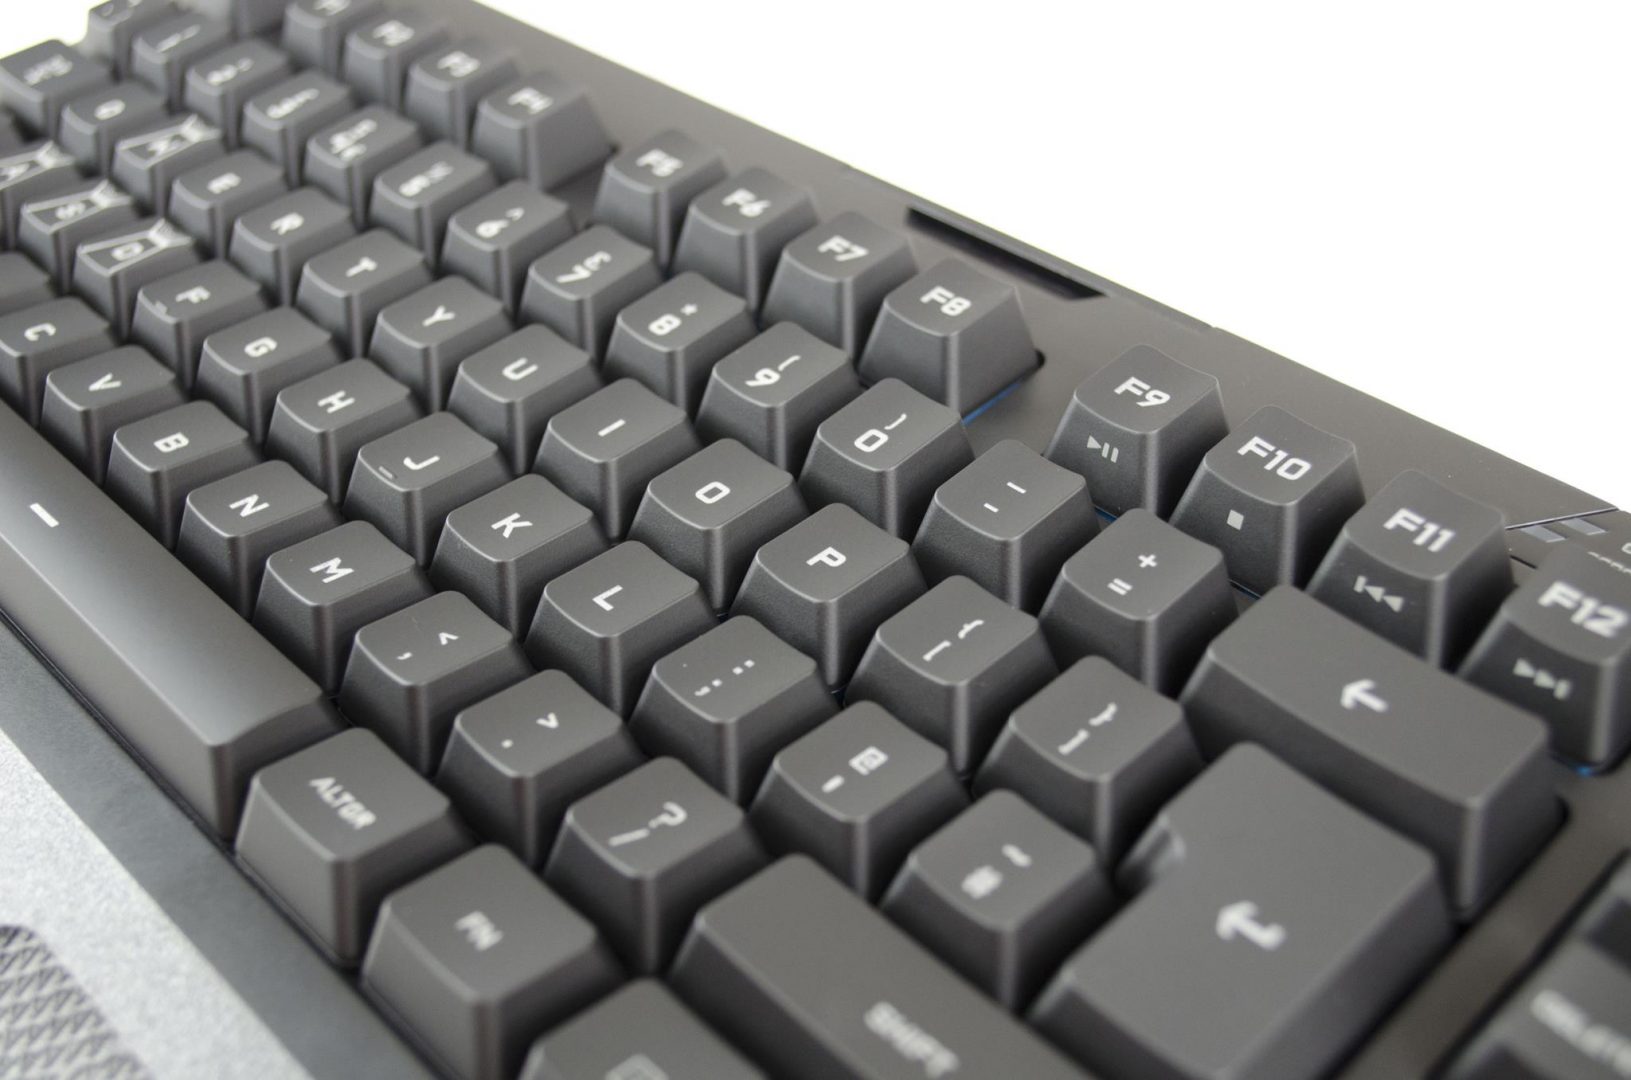 Logitech G410 Atlas Spectrum Mechanical Gaming Keyboard Review